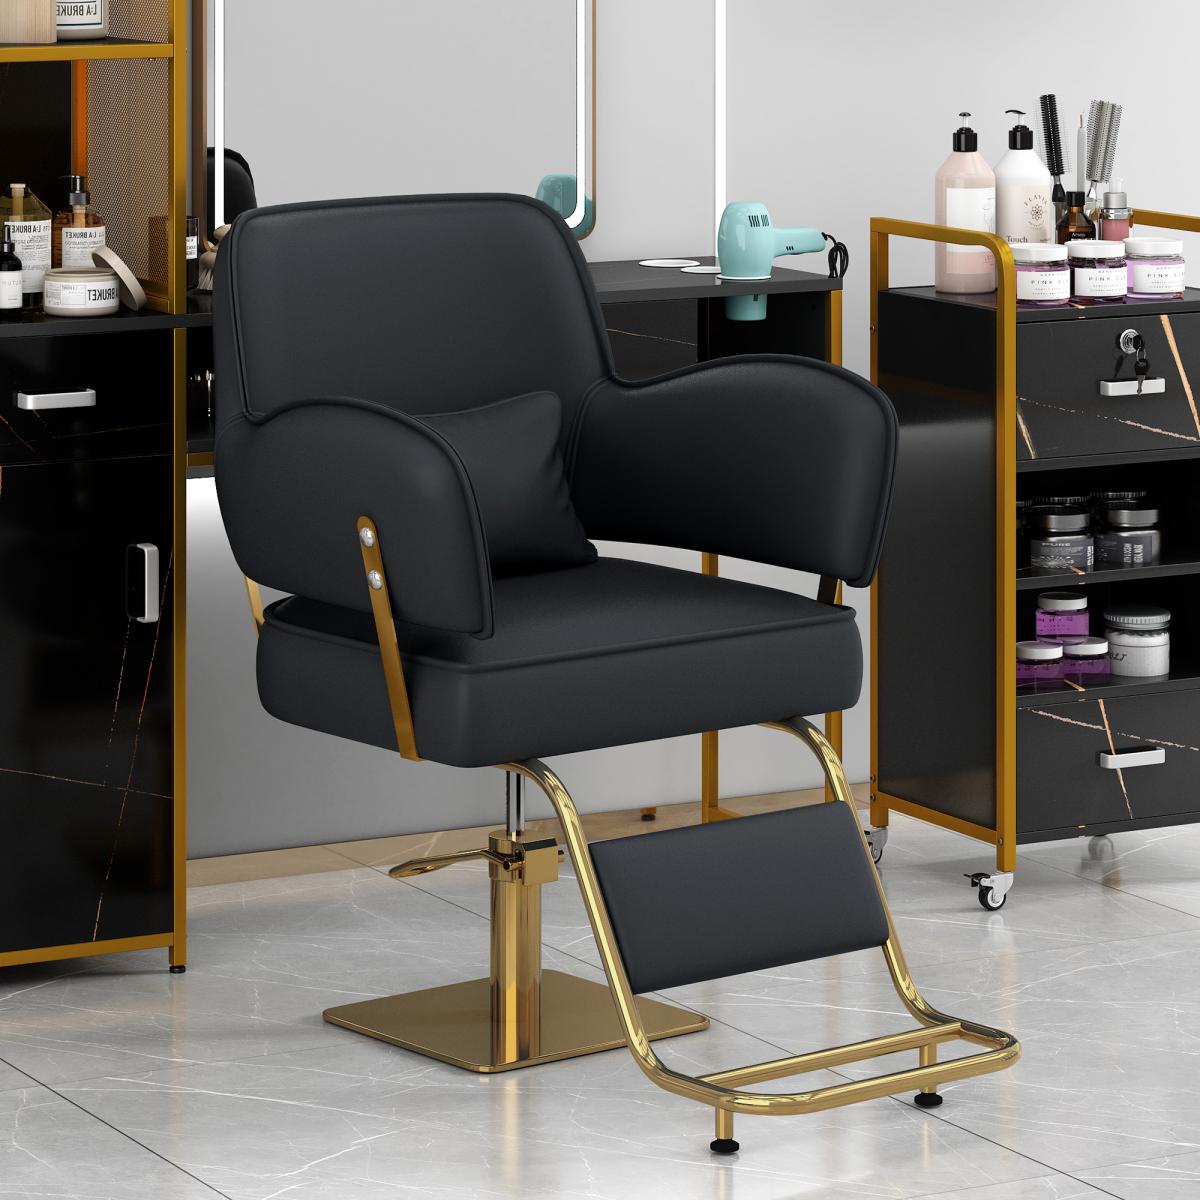 Elegant Barber Chair,Salon Chair for Hair Stylis,with Heavy Duty Hydraulic Pump Adjustable Barber Chair for Beauty Salon Spa Equipment,Black